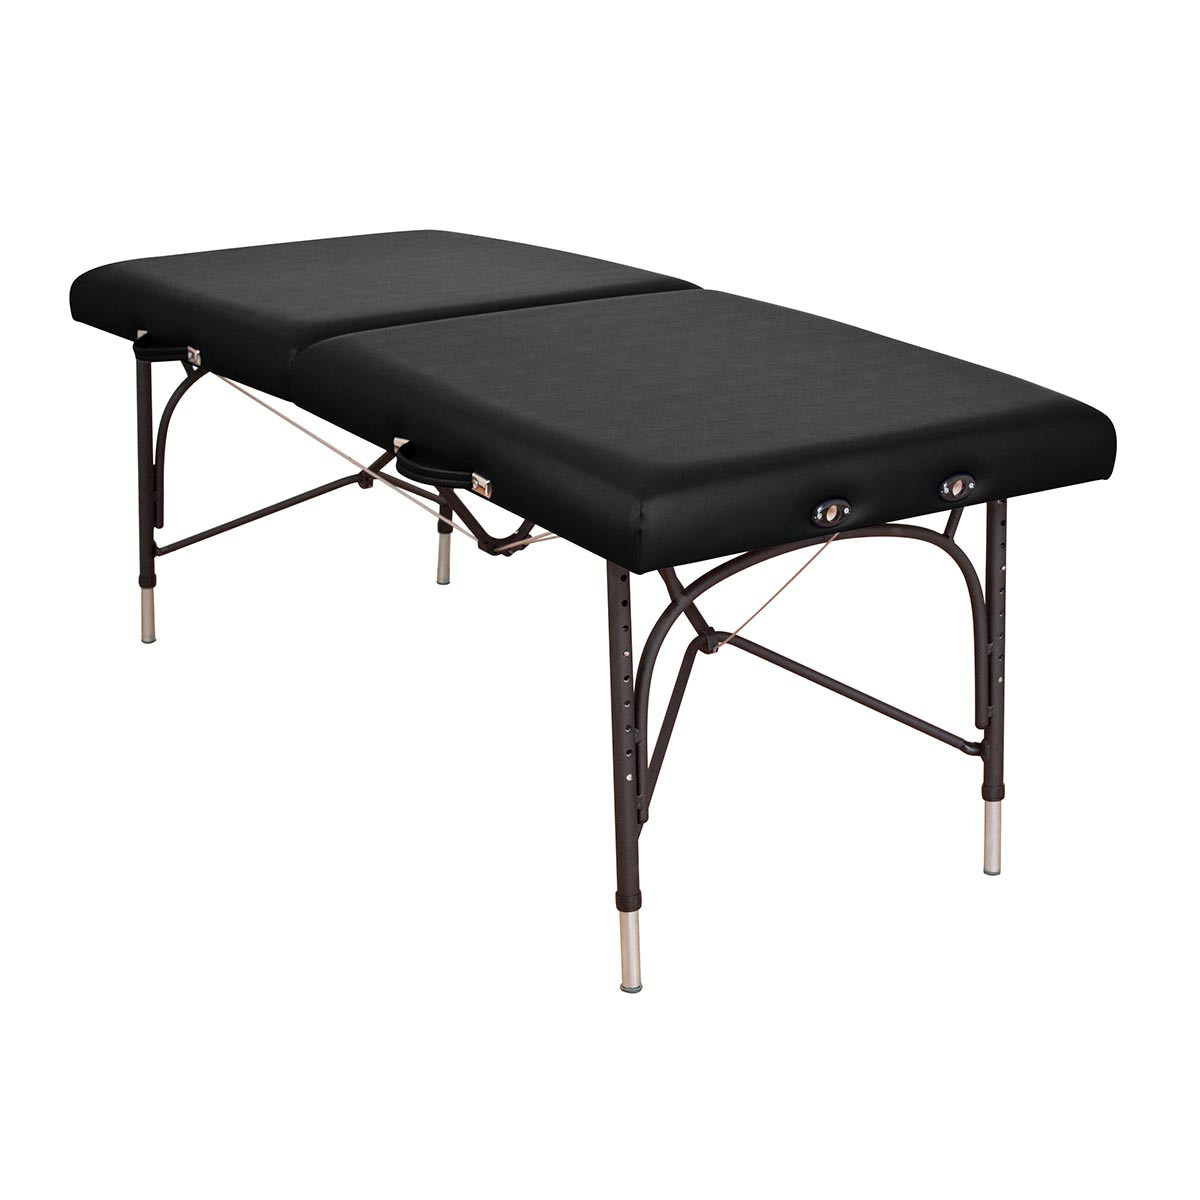 Oakworks WellSpring Massage Table Black